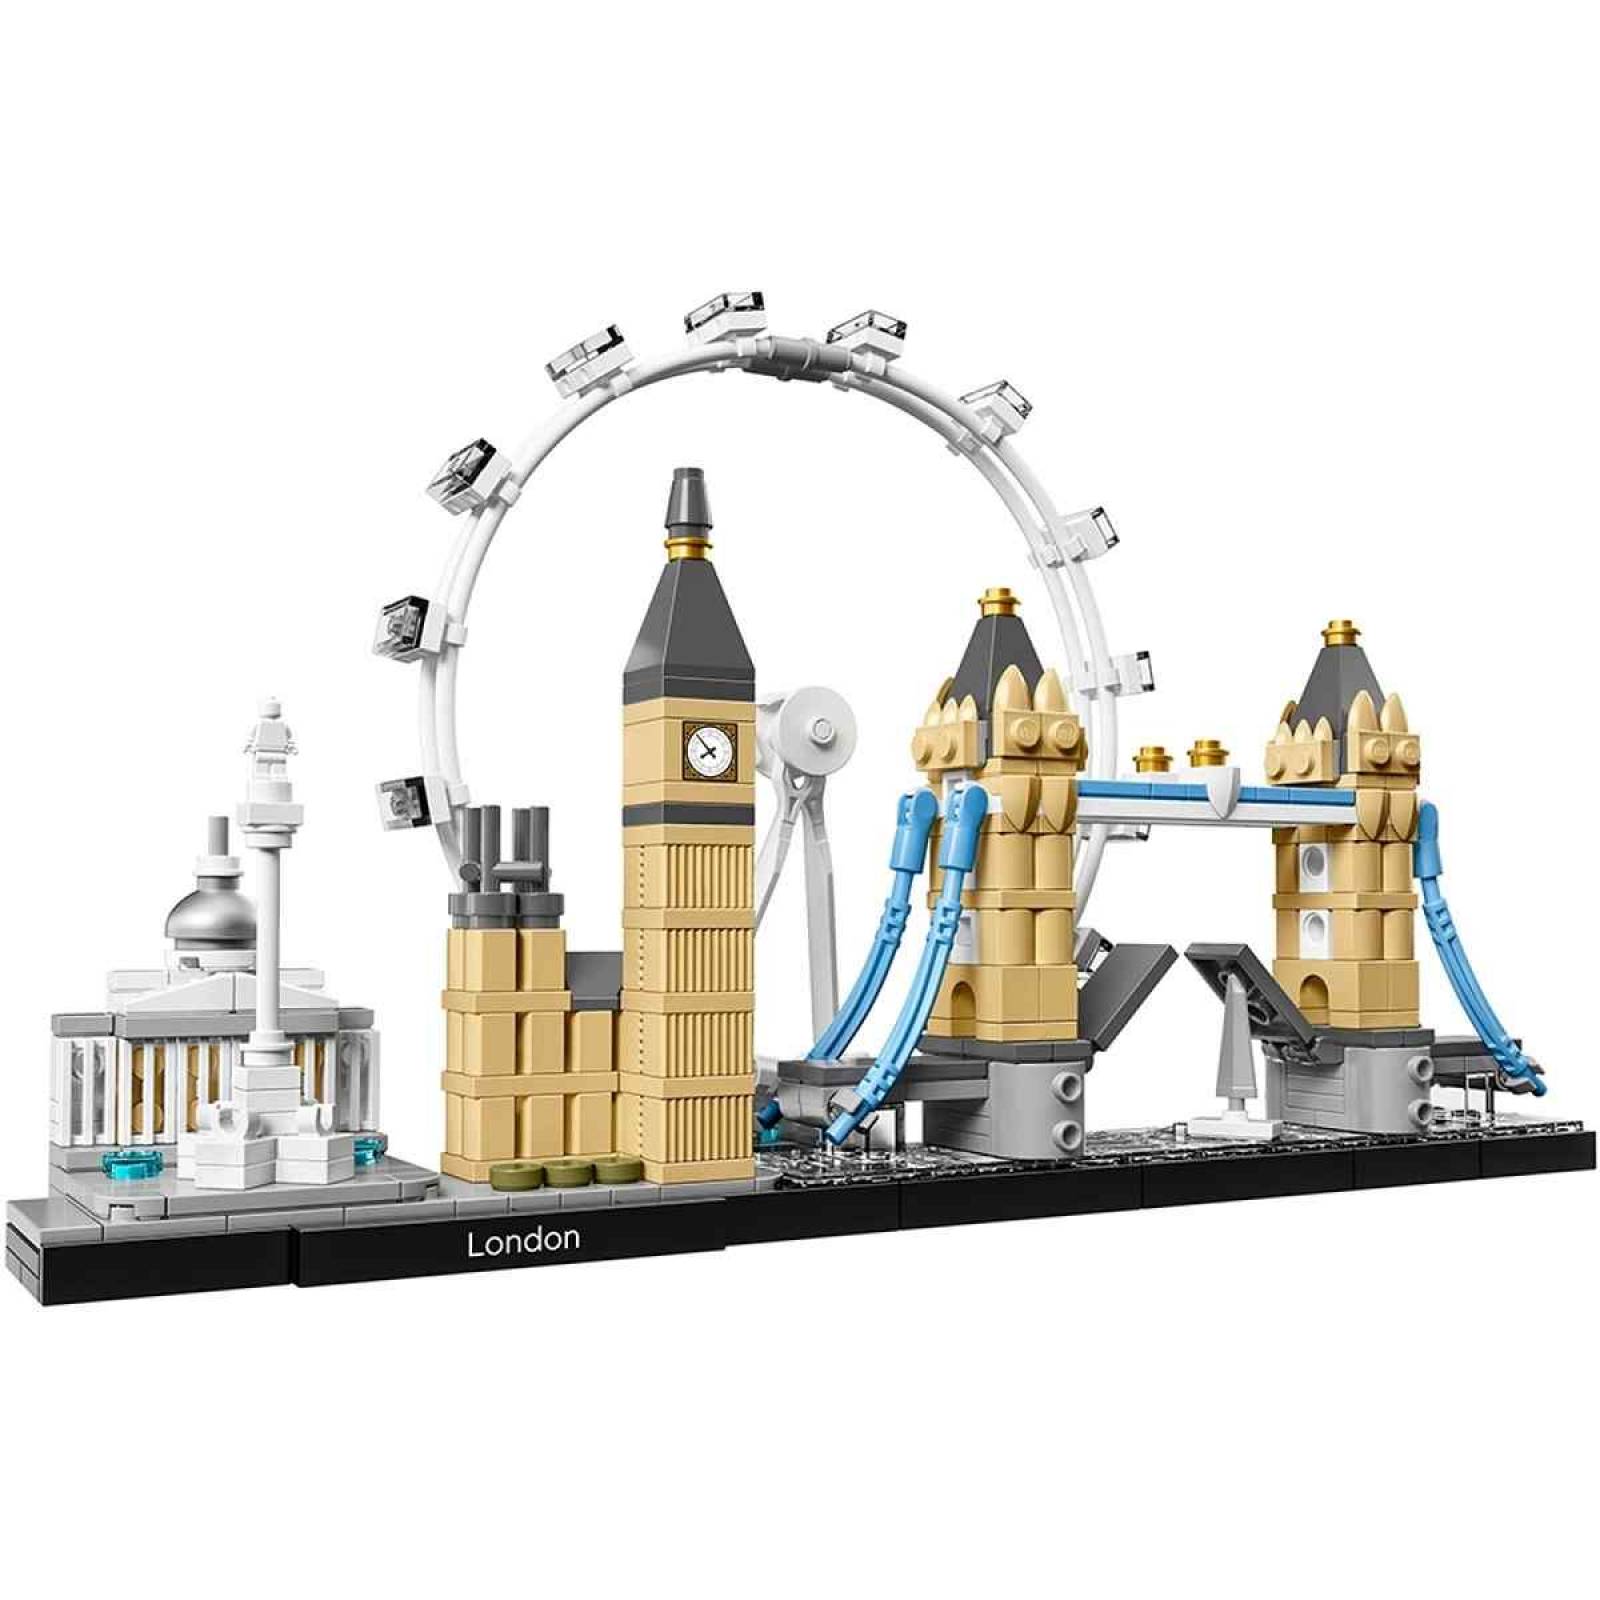 LEGO Architecture Londres